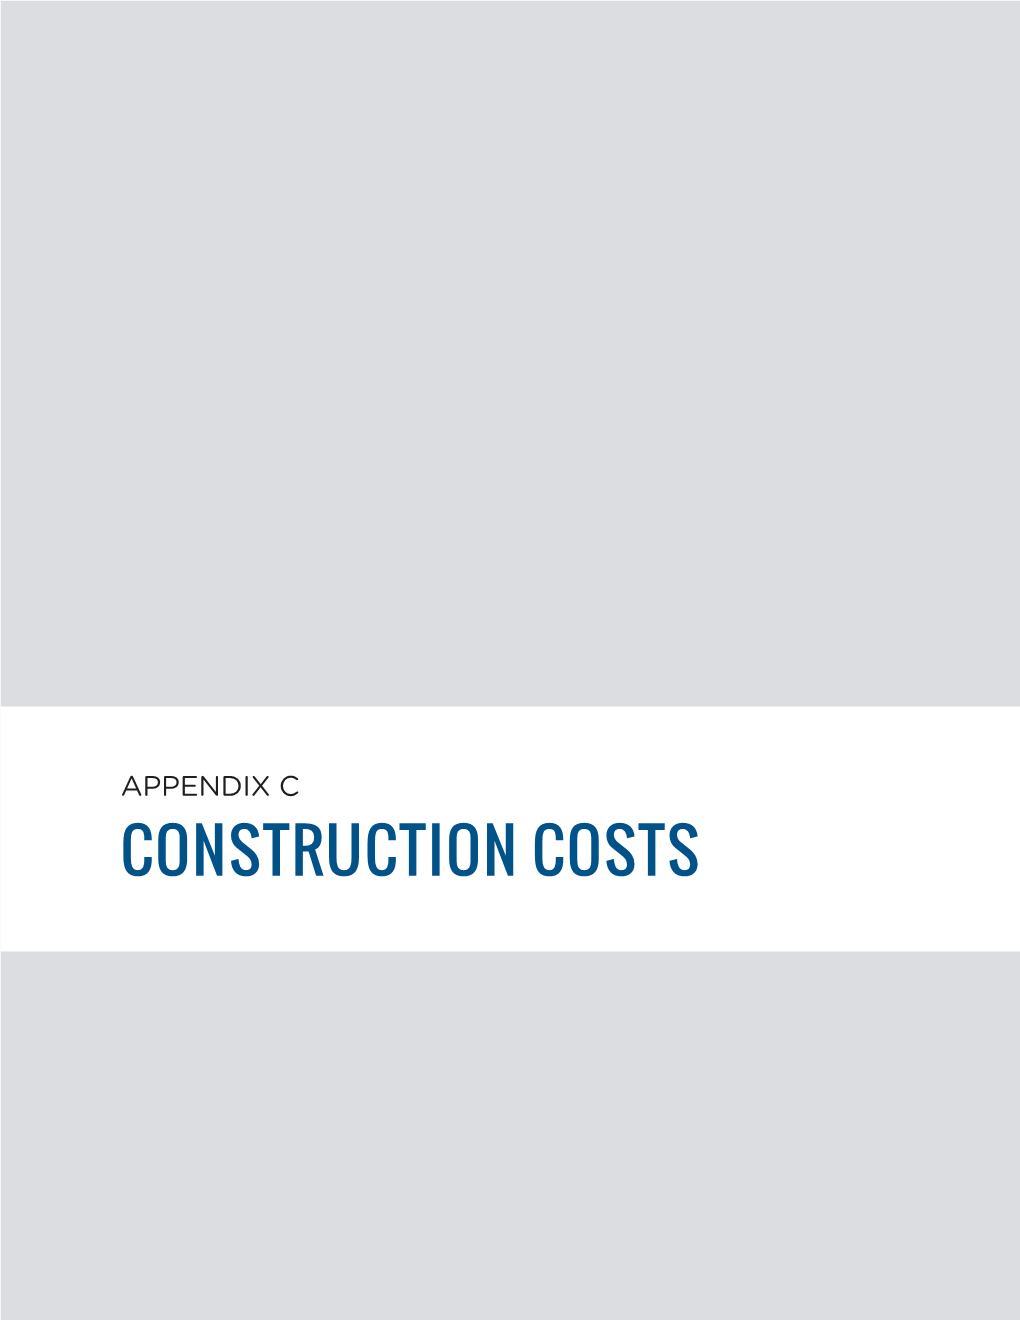 State Route 85 Guideway-Appendix C Construction Costs